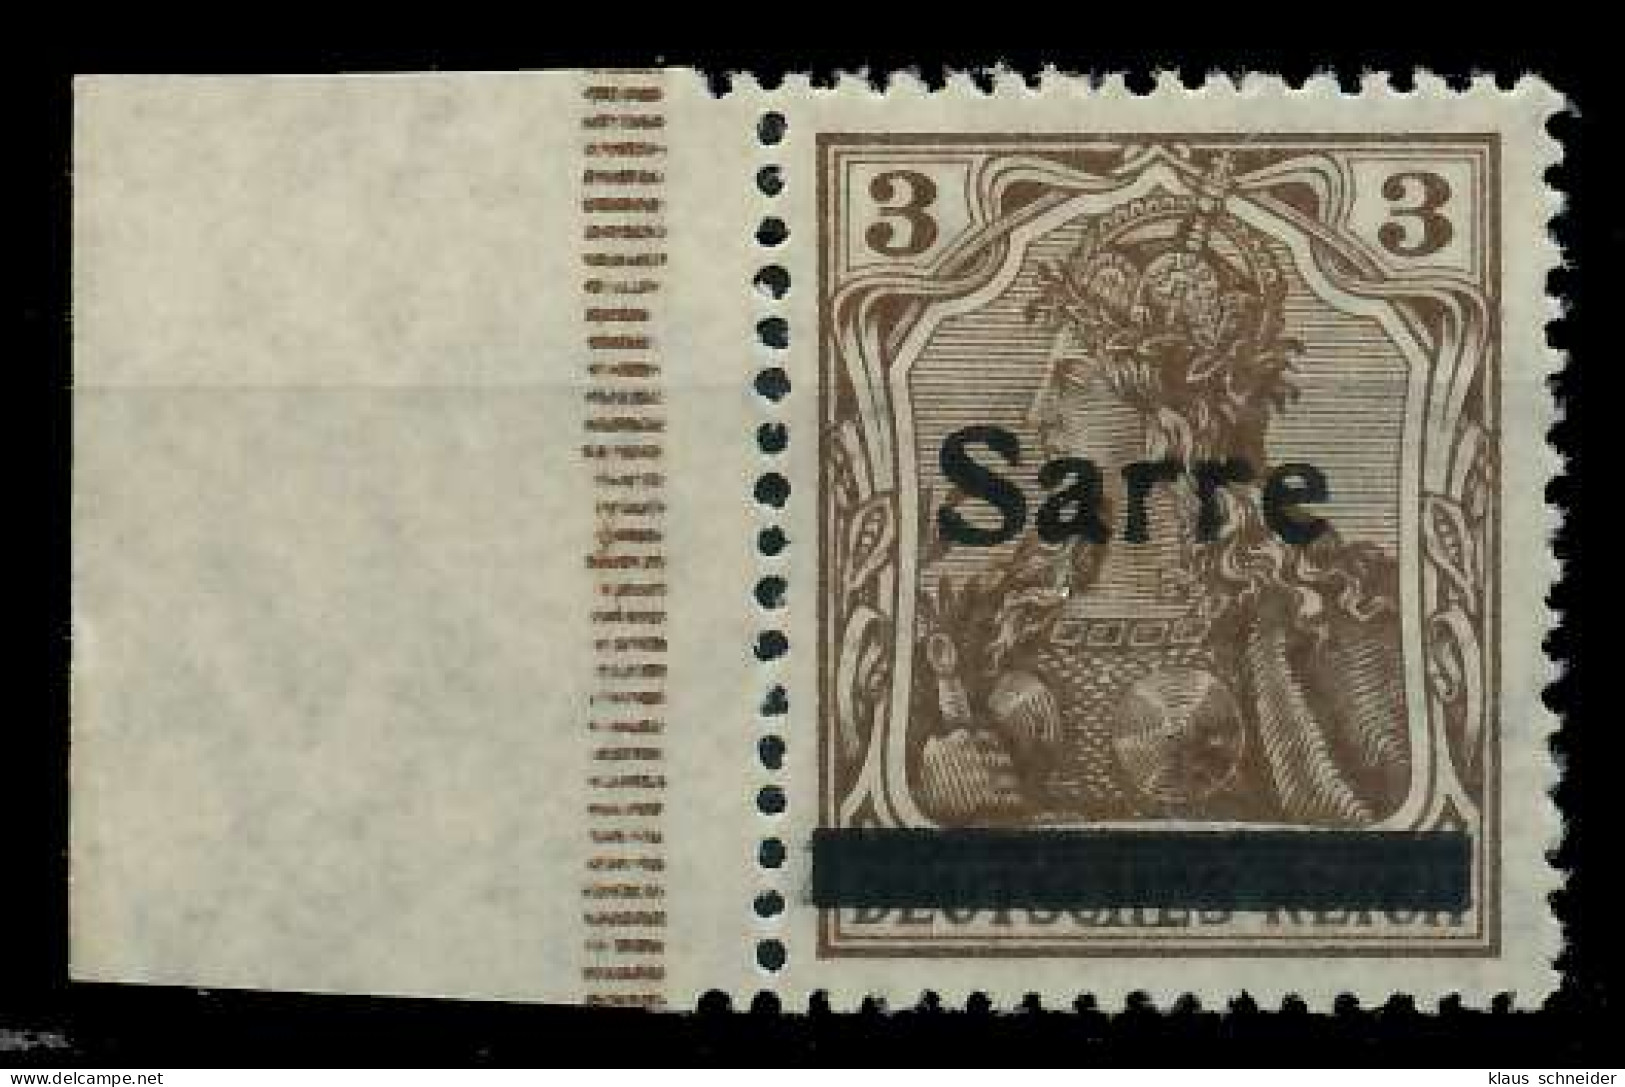 SAARGEBIET GERMANIA Nr 3II Postfrisch ATTEST X7B0EC2 - Unused Stamps